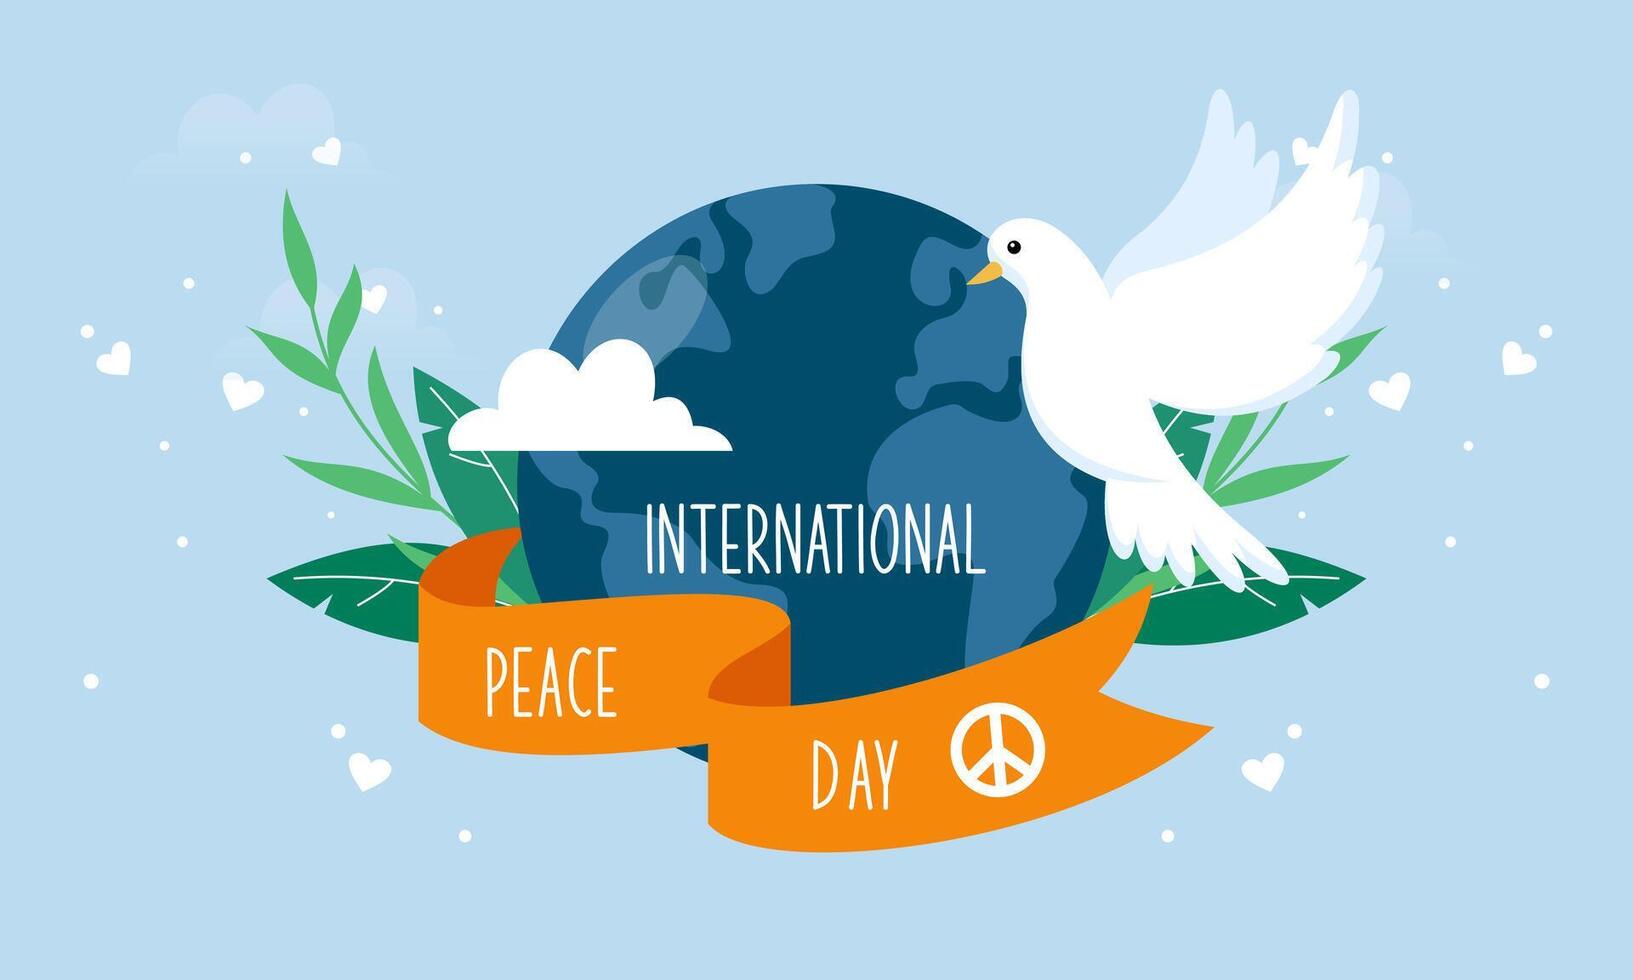 International Day of Peace vector illustration